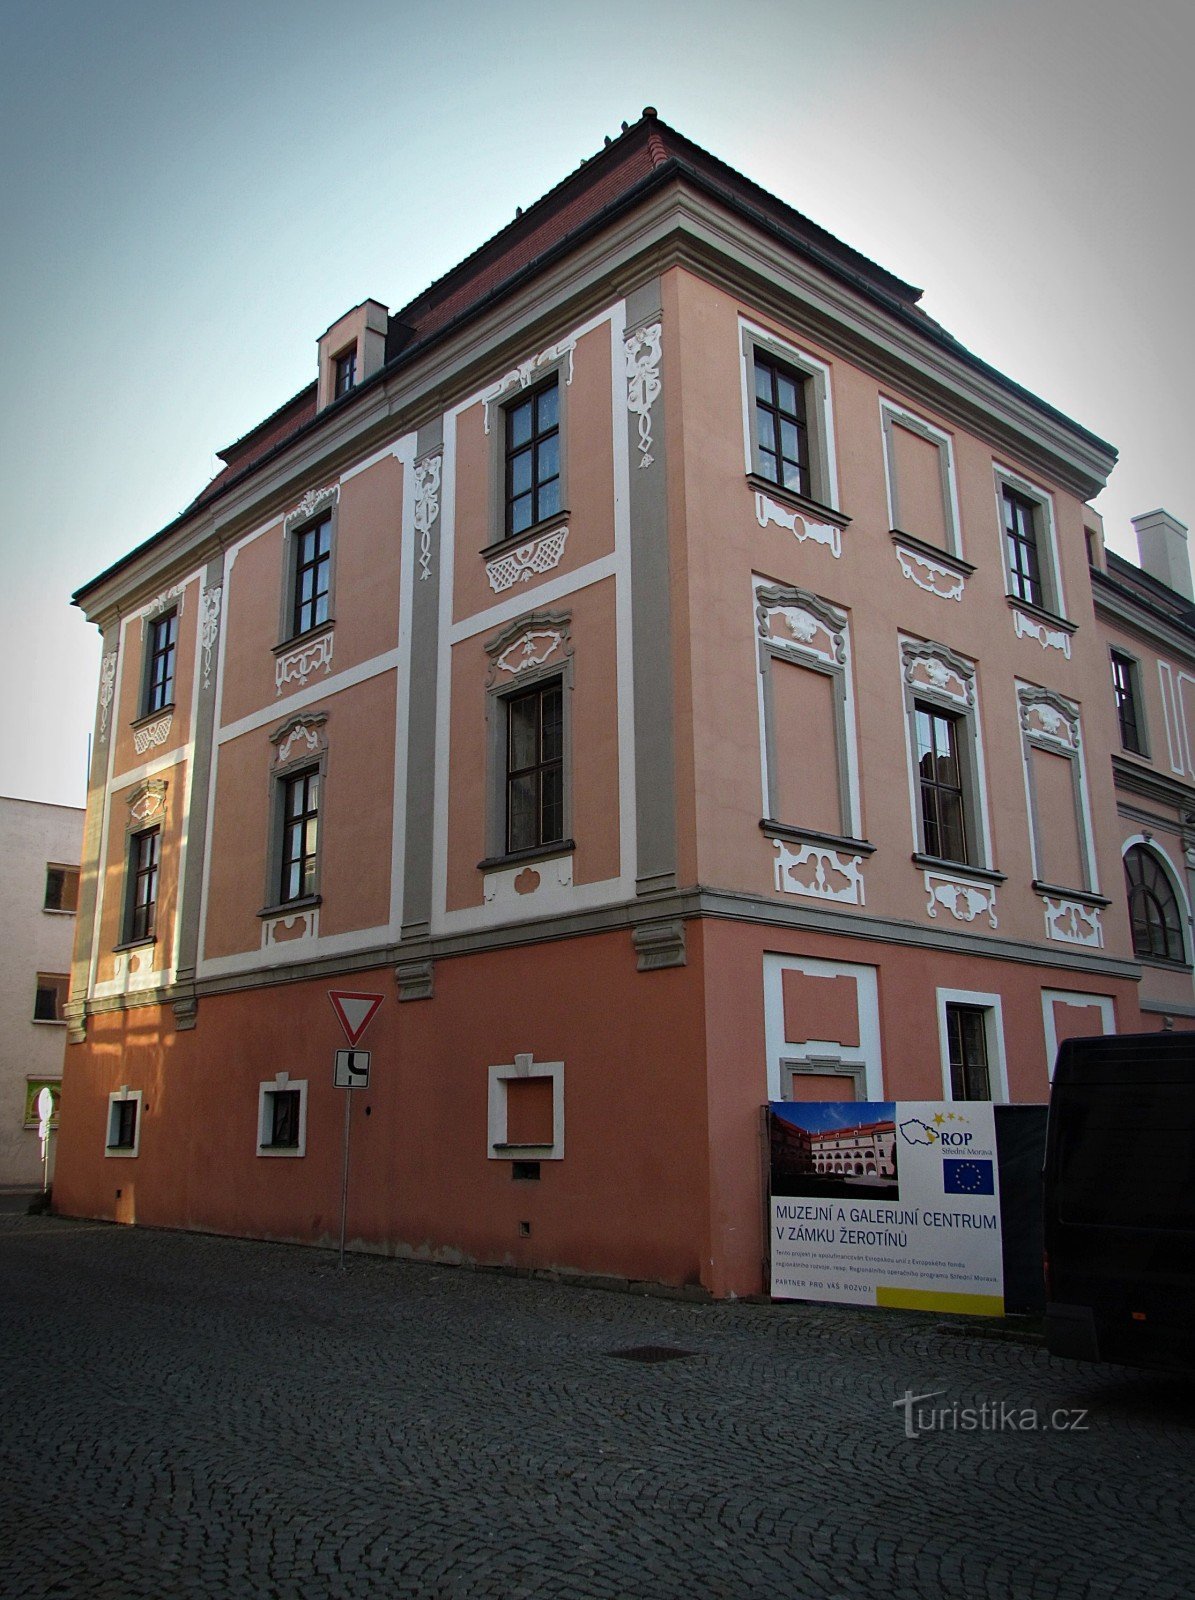 Valašské Meziříčí - замок Жеротин в центрі міста